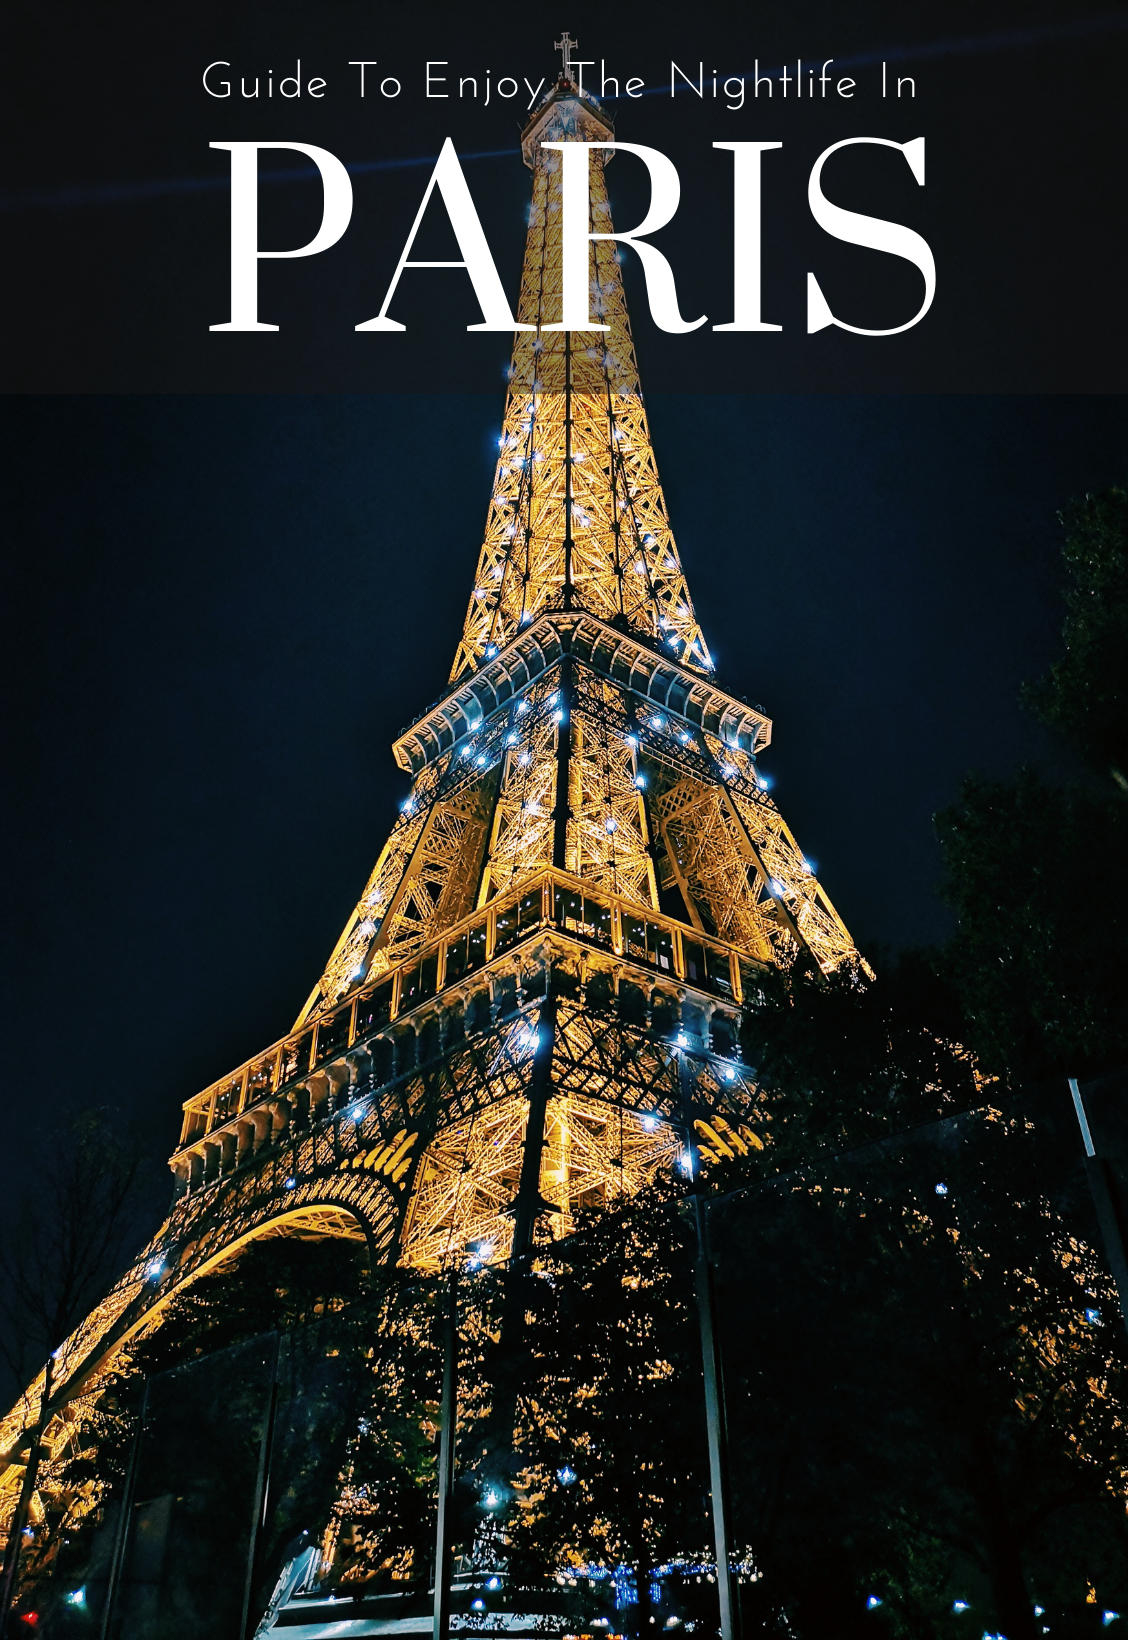 Guide to enjoy the nightlife in Paris